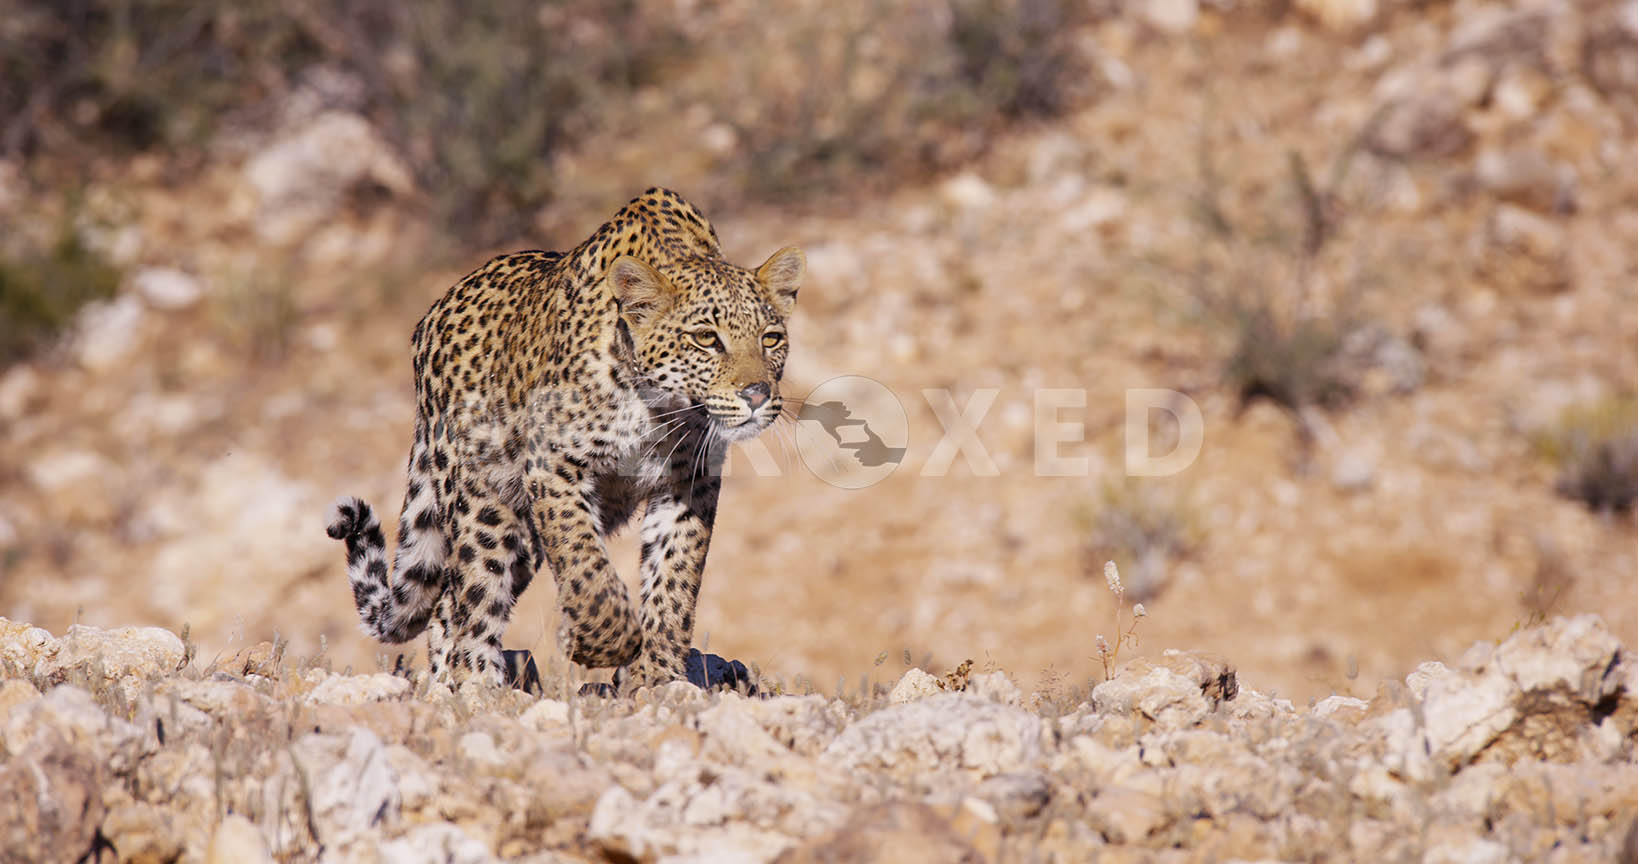 Leopard Kgahagadi 2018_1.39.1.jpg